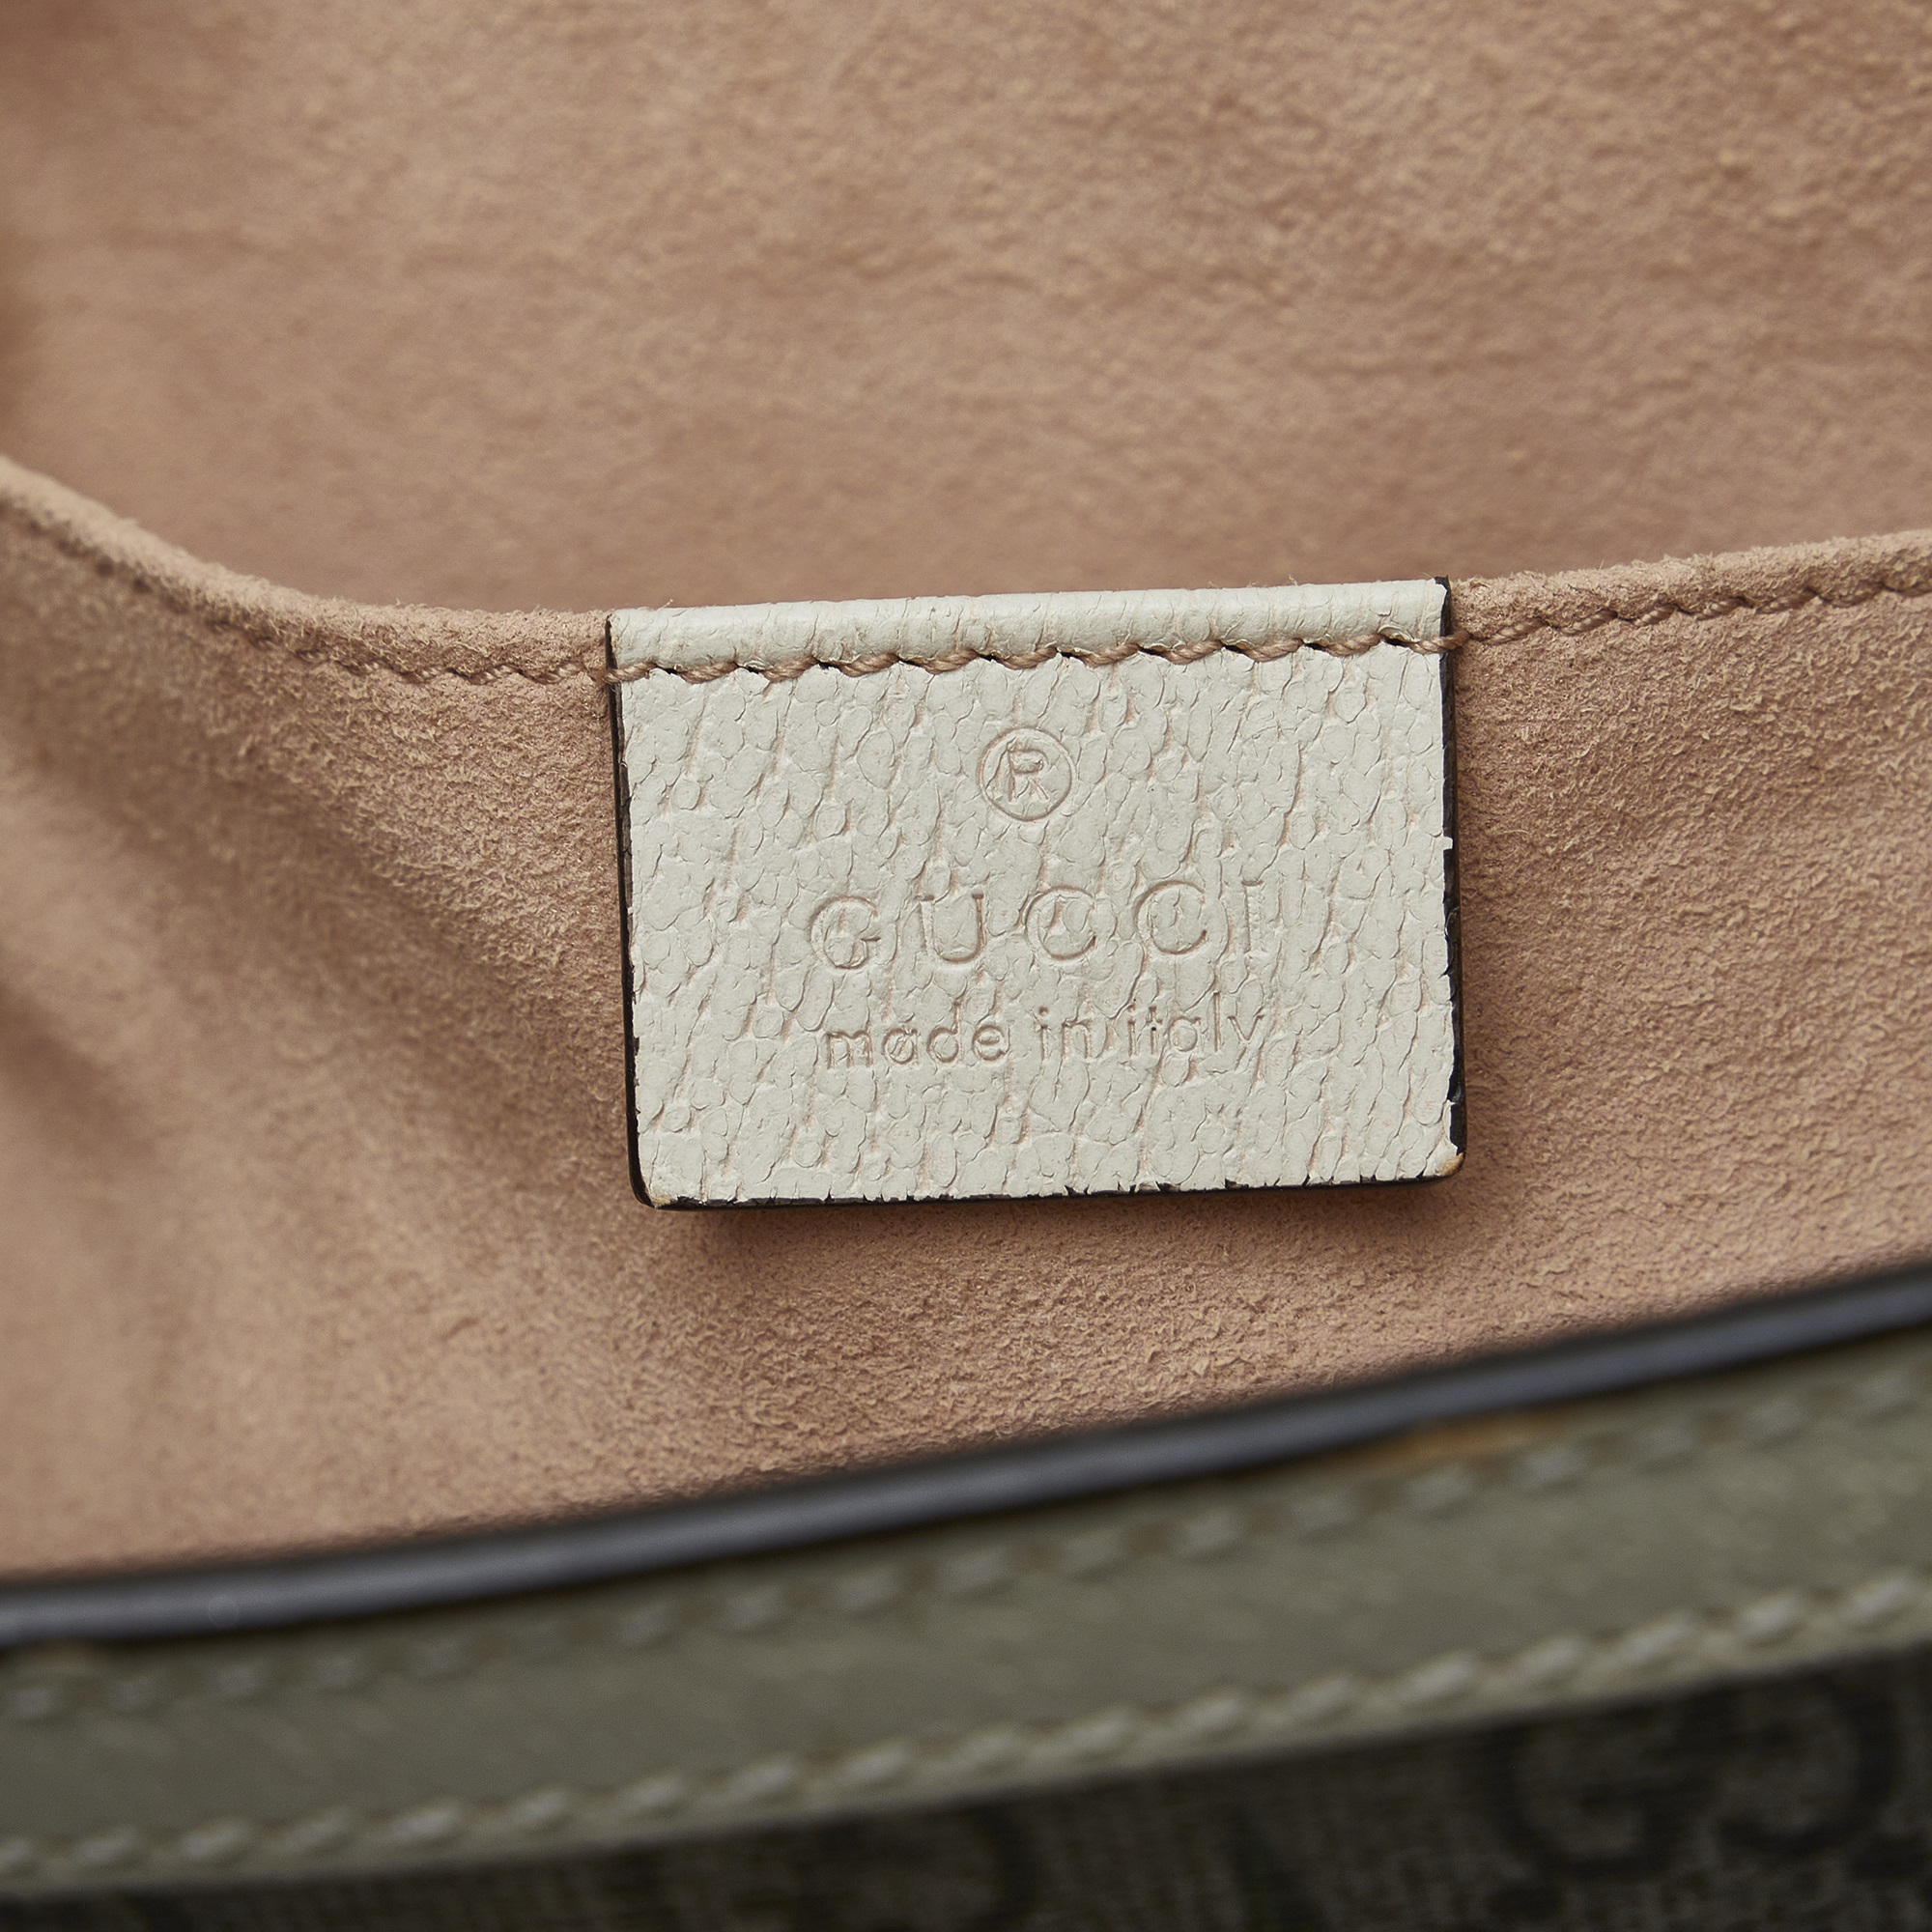 Gucci Multicolour GG Supreme Flora Padlock Shoulder Bag